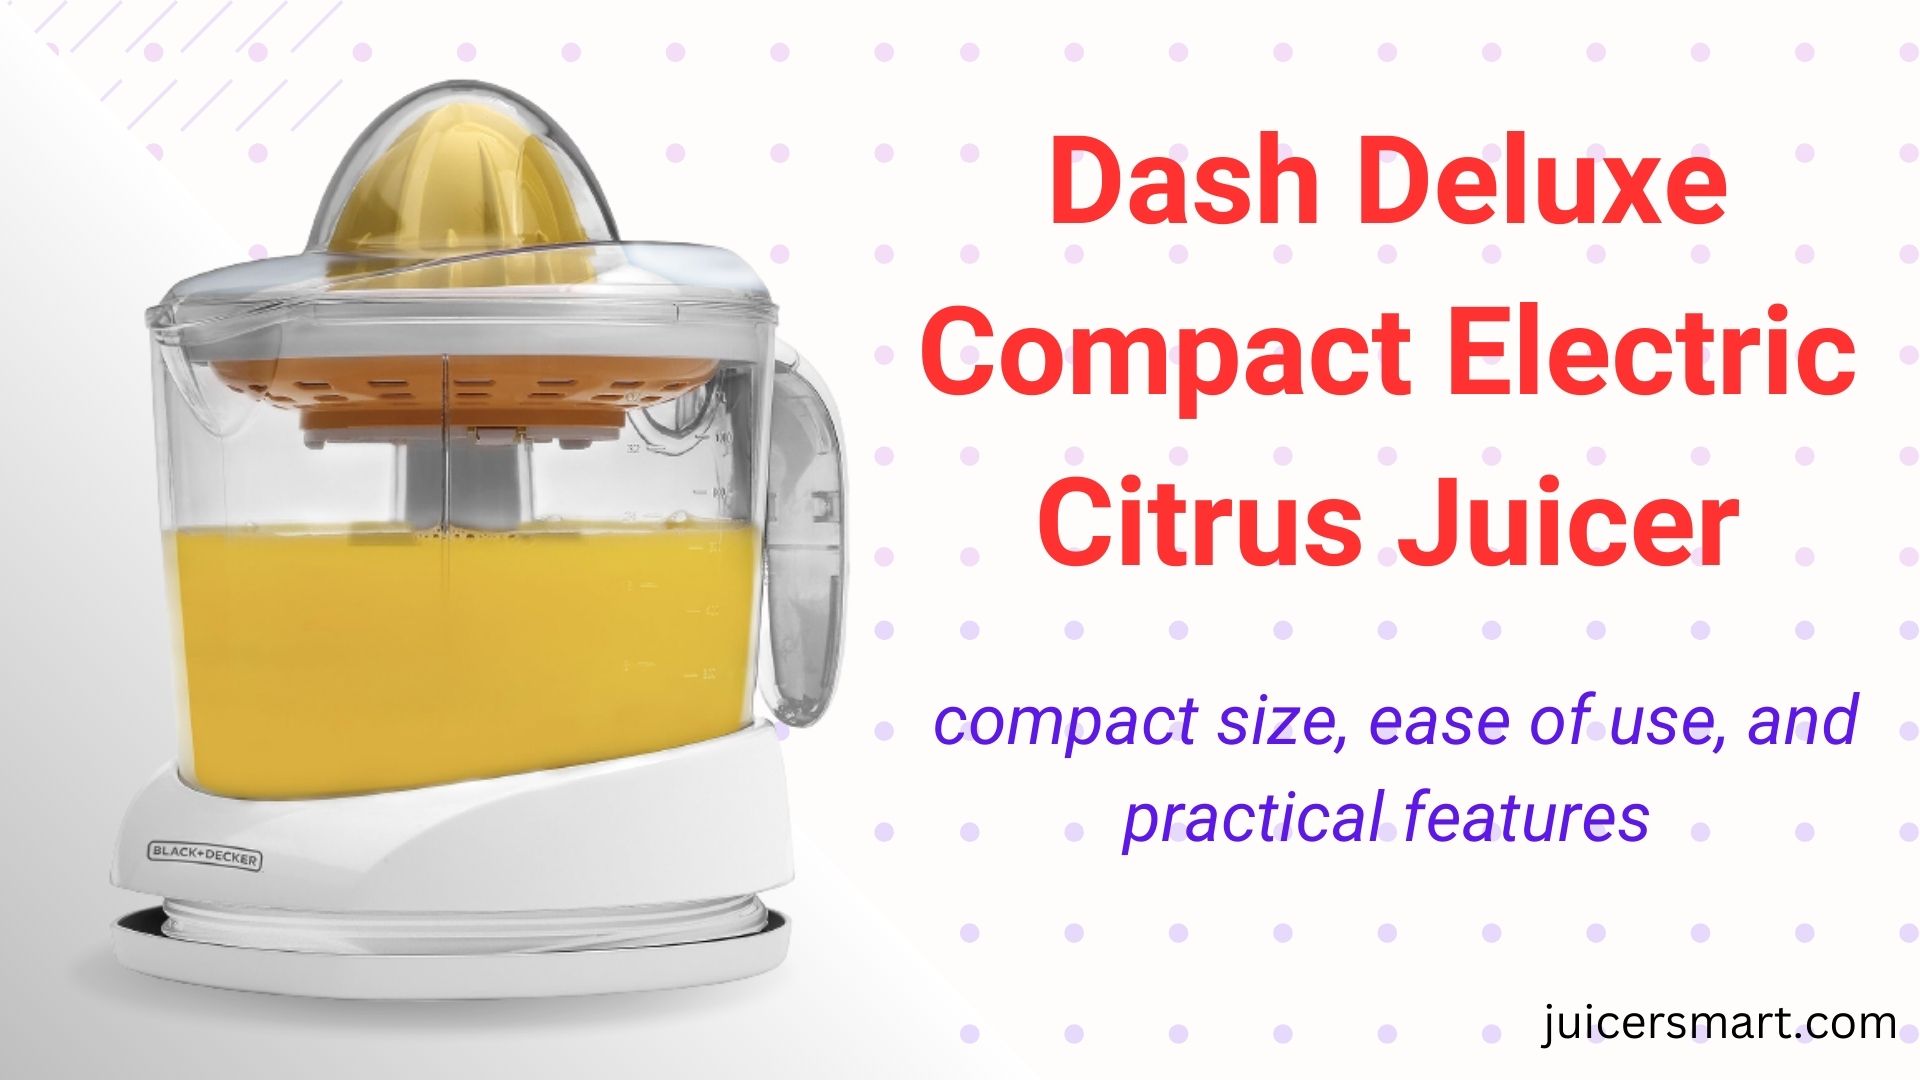 Dash Deluxe Compact Electric Citrus Juicer